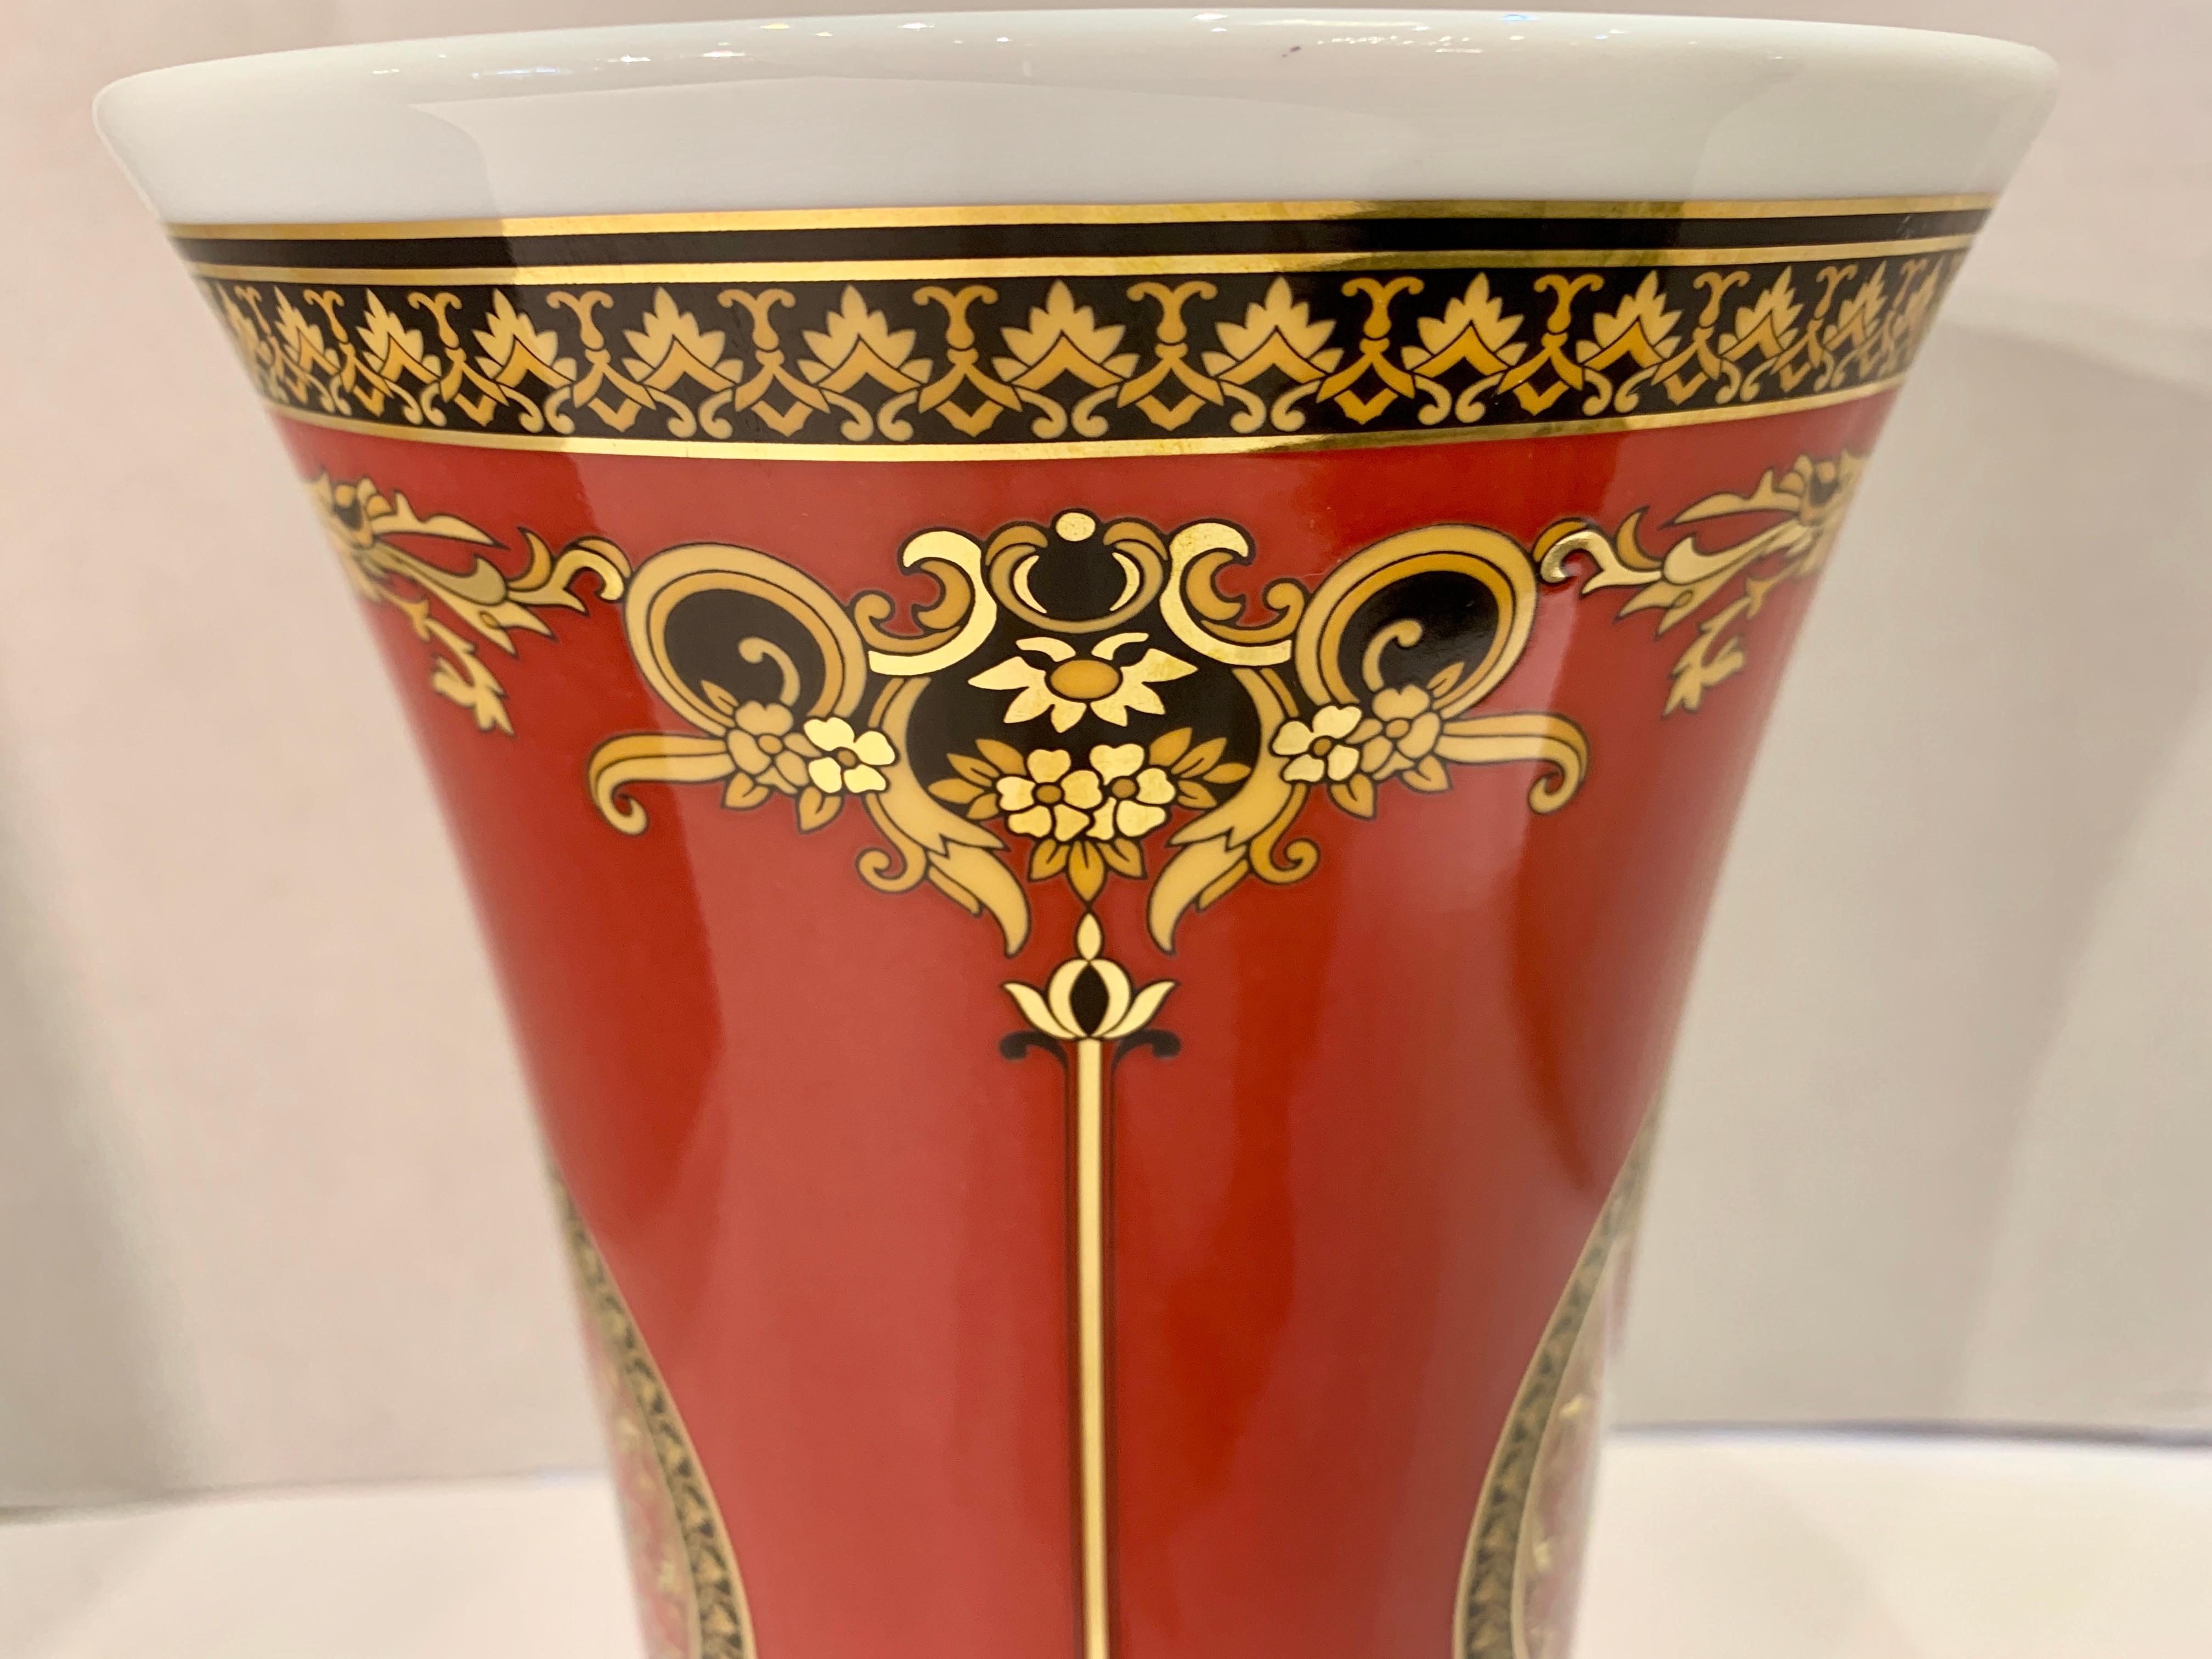 German Magnificent Versace Porcelain Vase “Medusa Red Collection” by Rosenthal